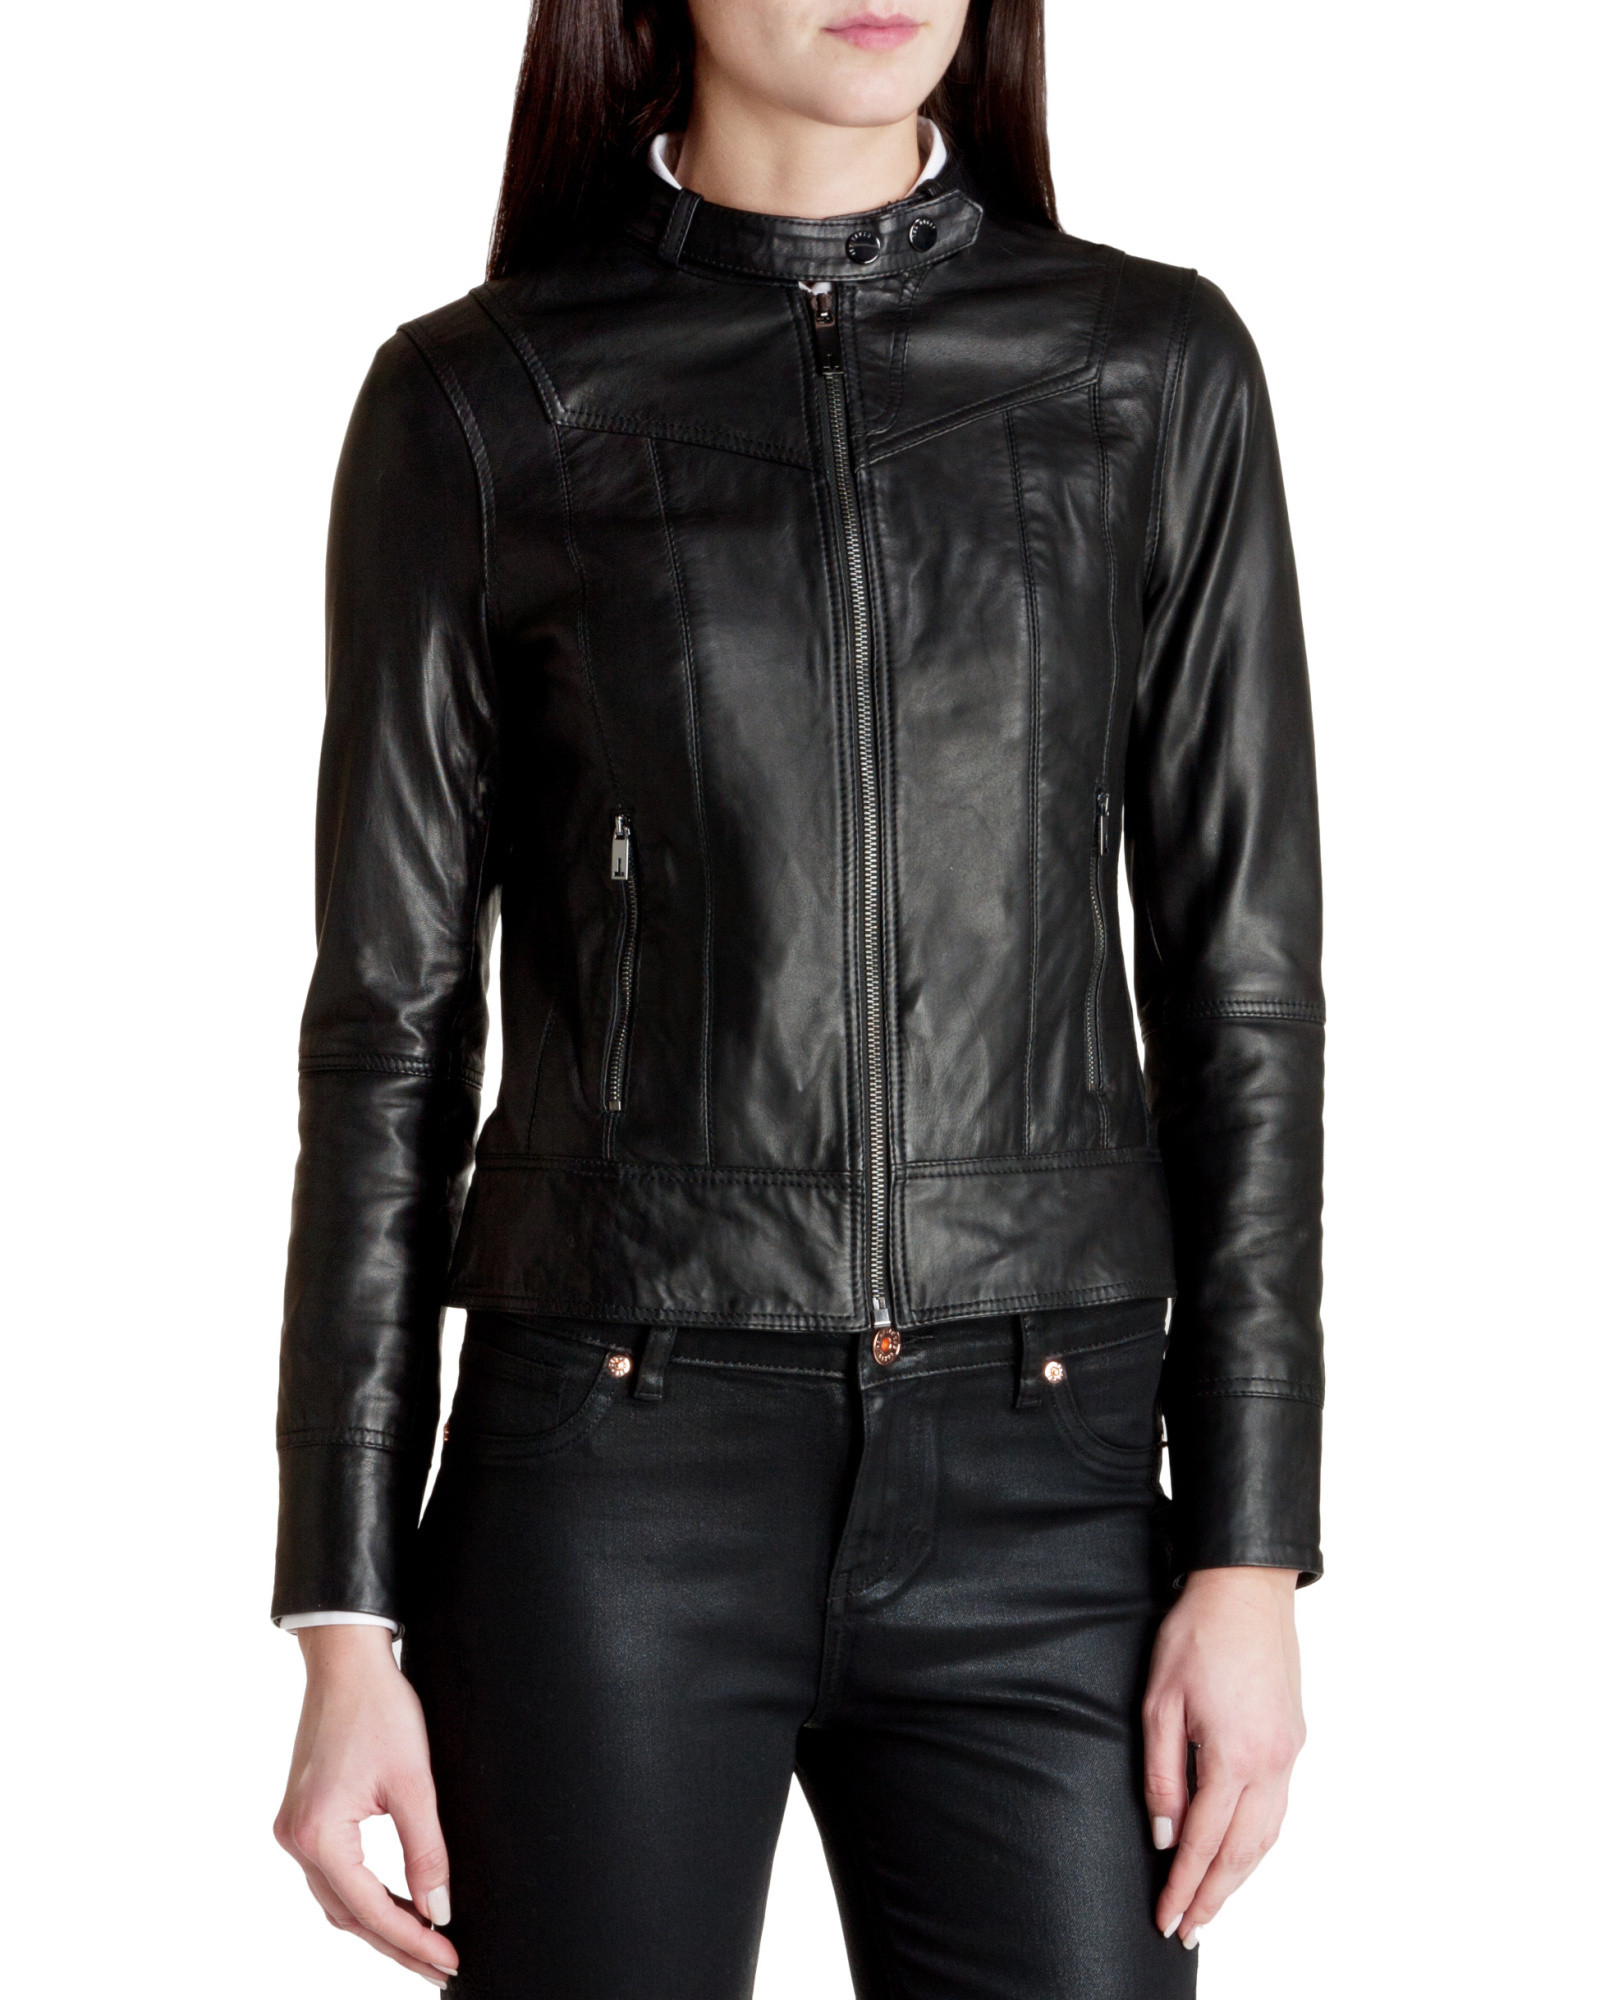 Lyst - Ted Baker Brezan Panelled Leather Jacket in Black